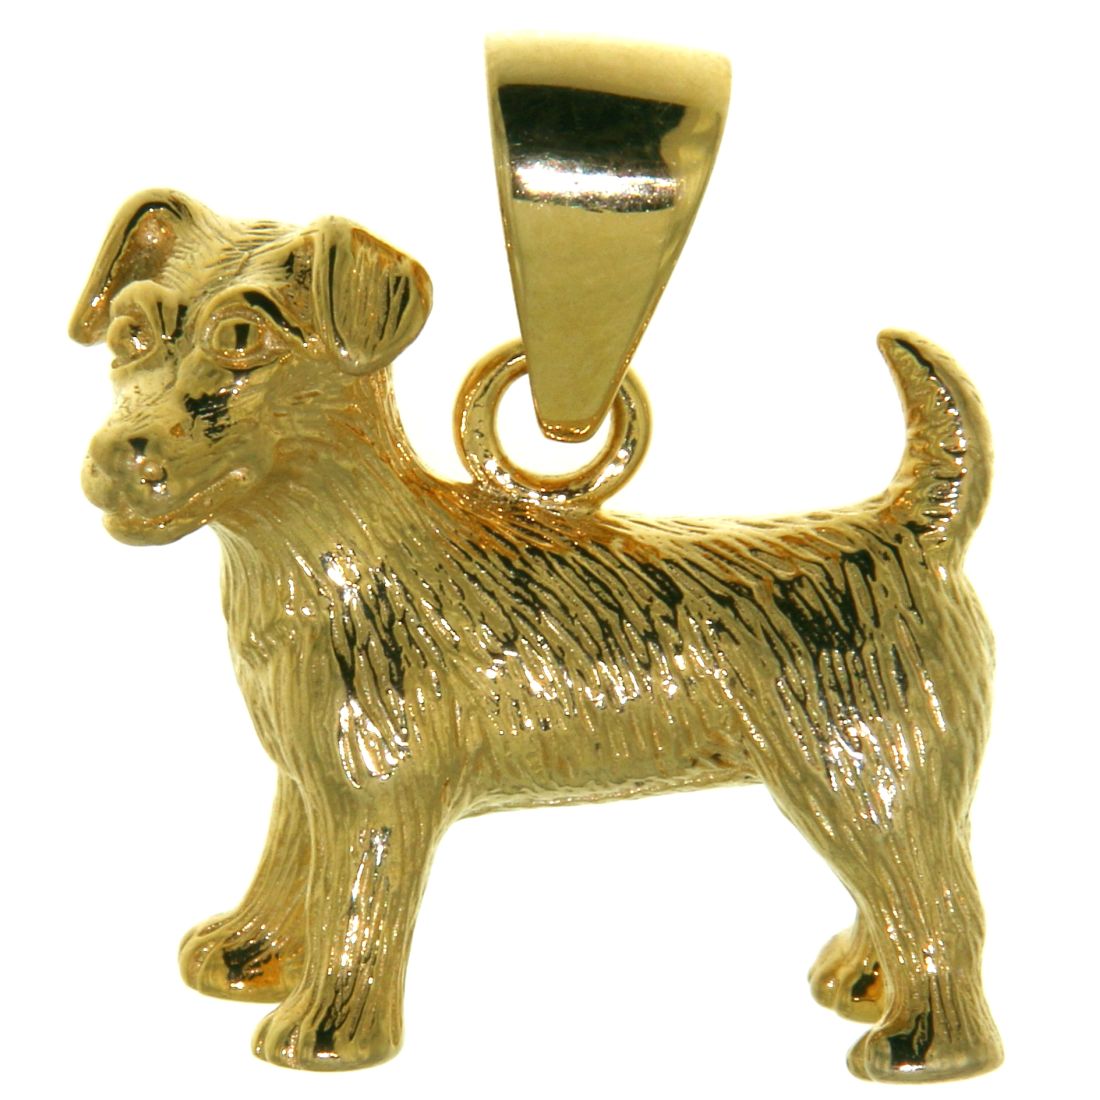 Derby Anhänger Jack-Russel-Terrier Hunderasse massiv echt Silber 23831 